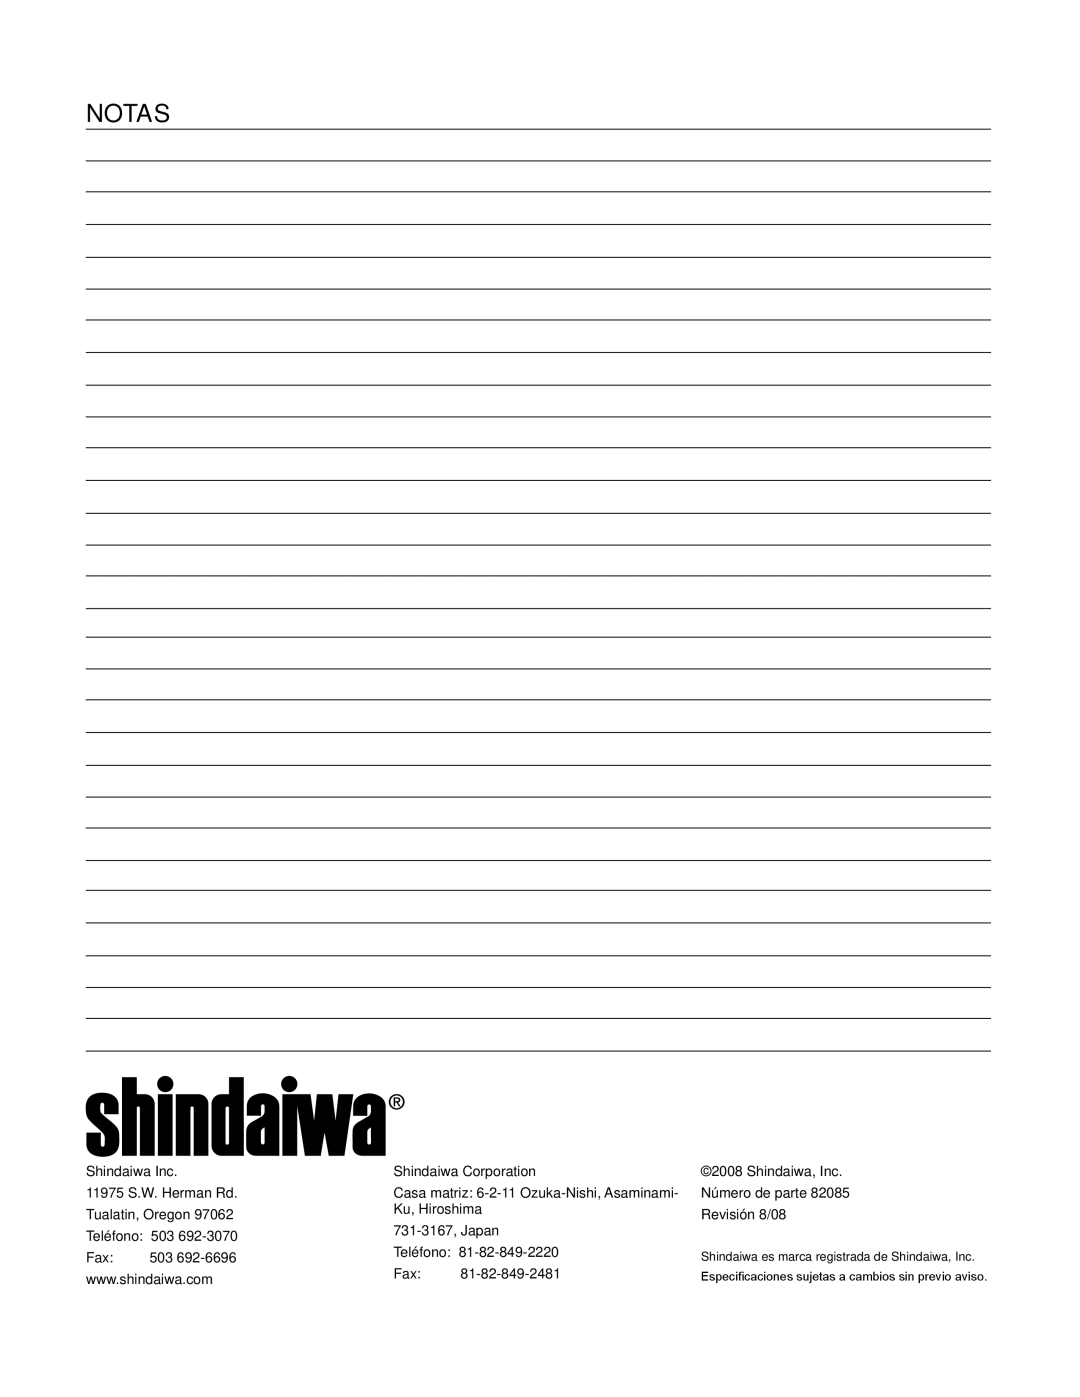 Shindaiwa 82085, 326T manual notAs, Shindaiwa Inc, Shindaiwa Corporation, 731-3167,Japan Teléfono Fax 